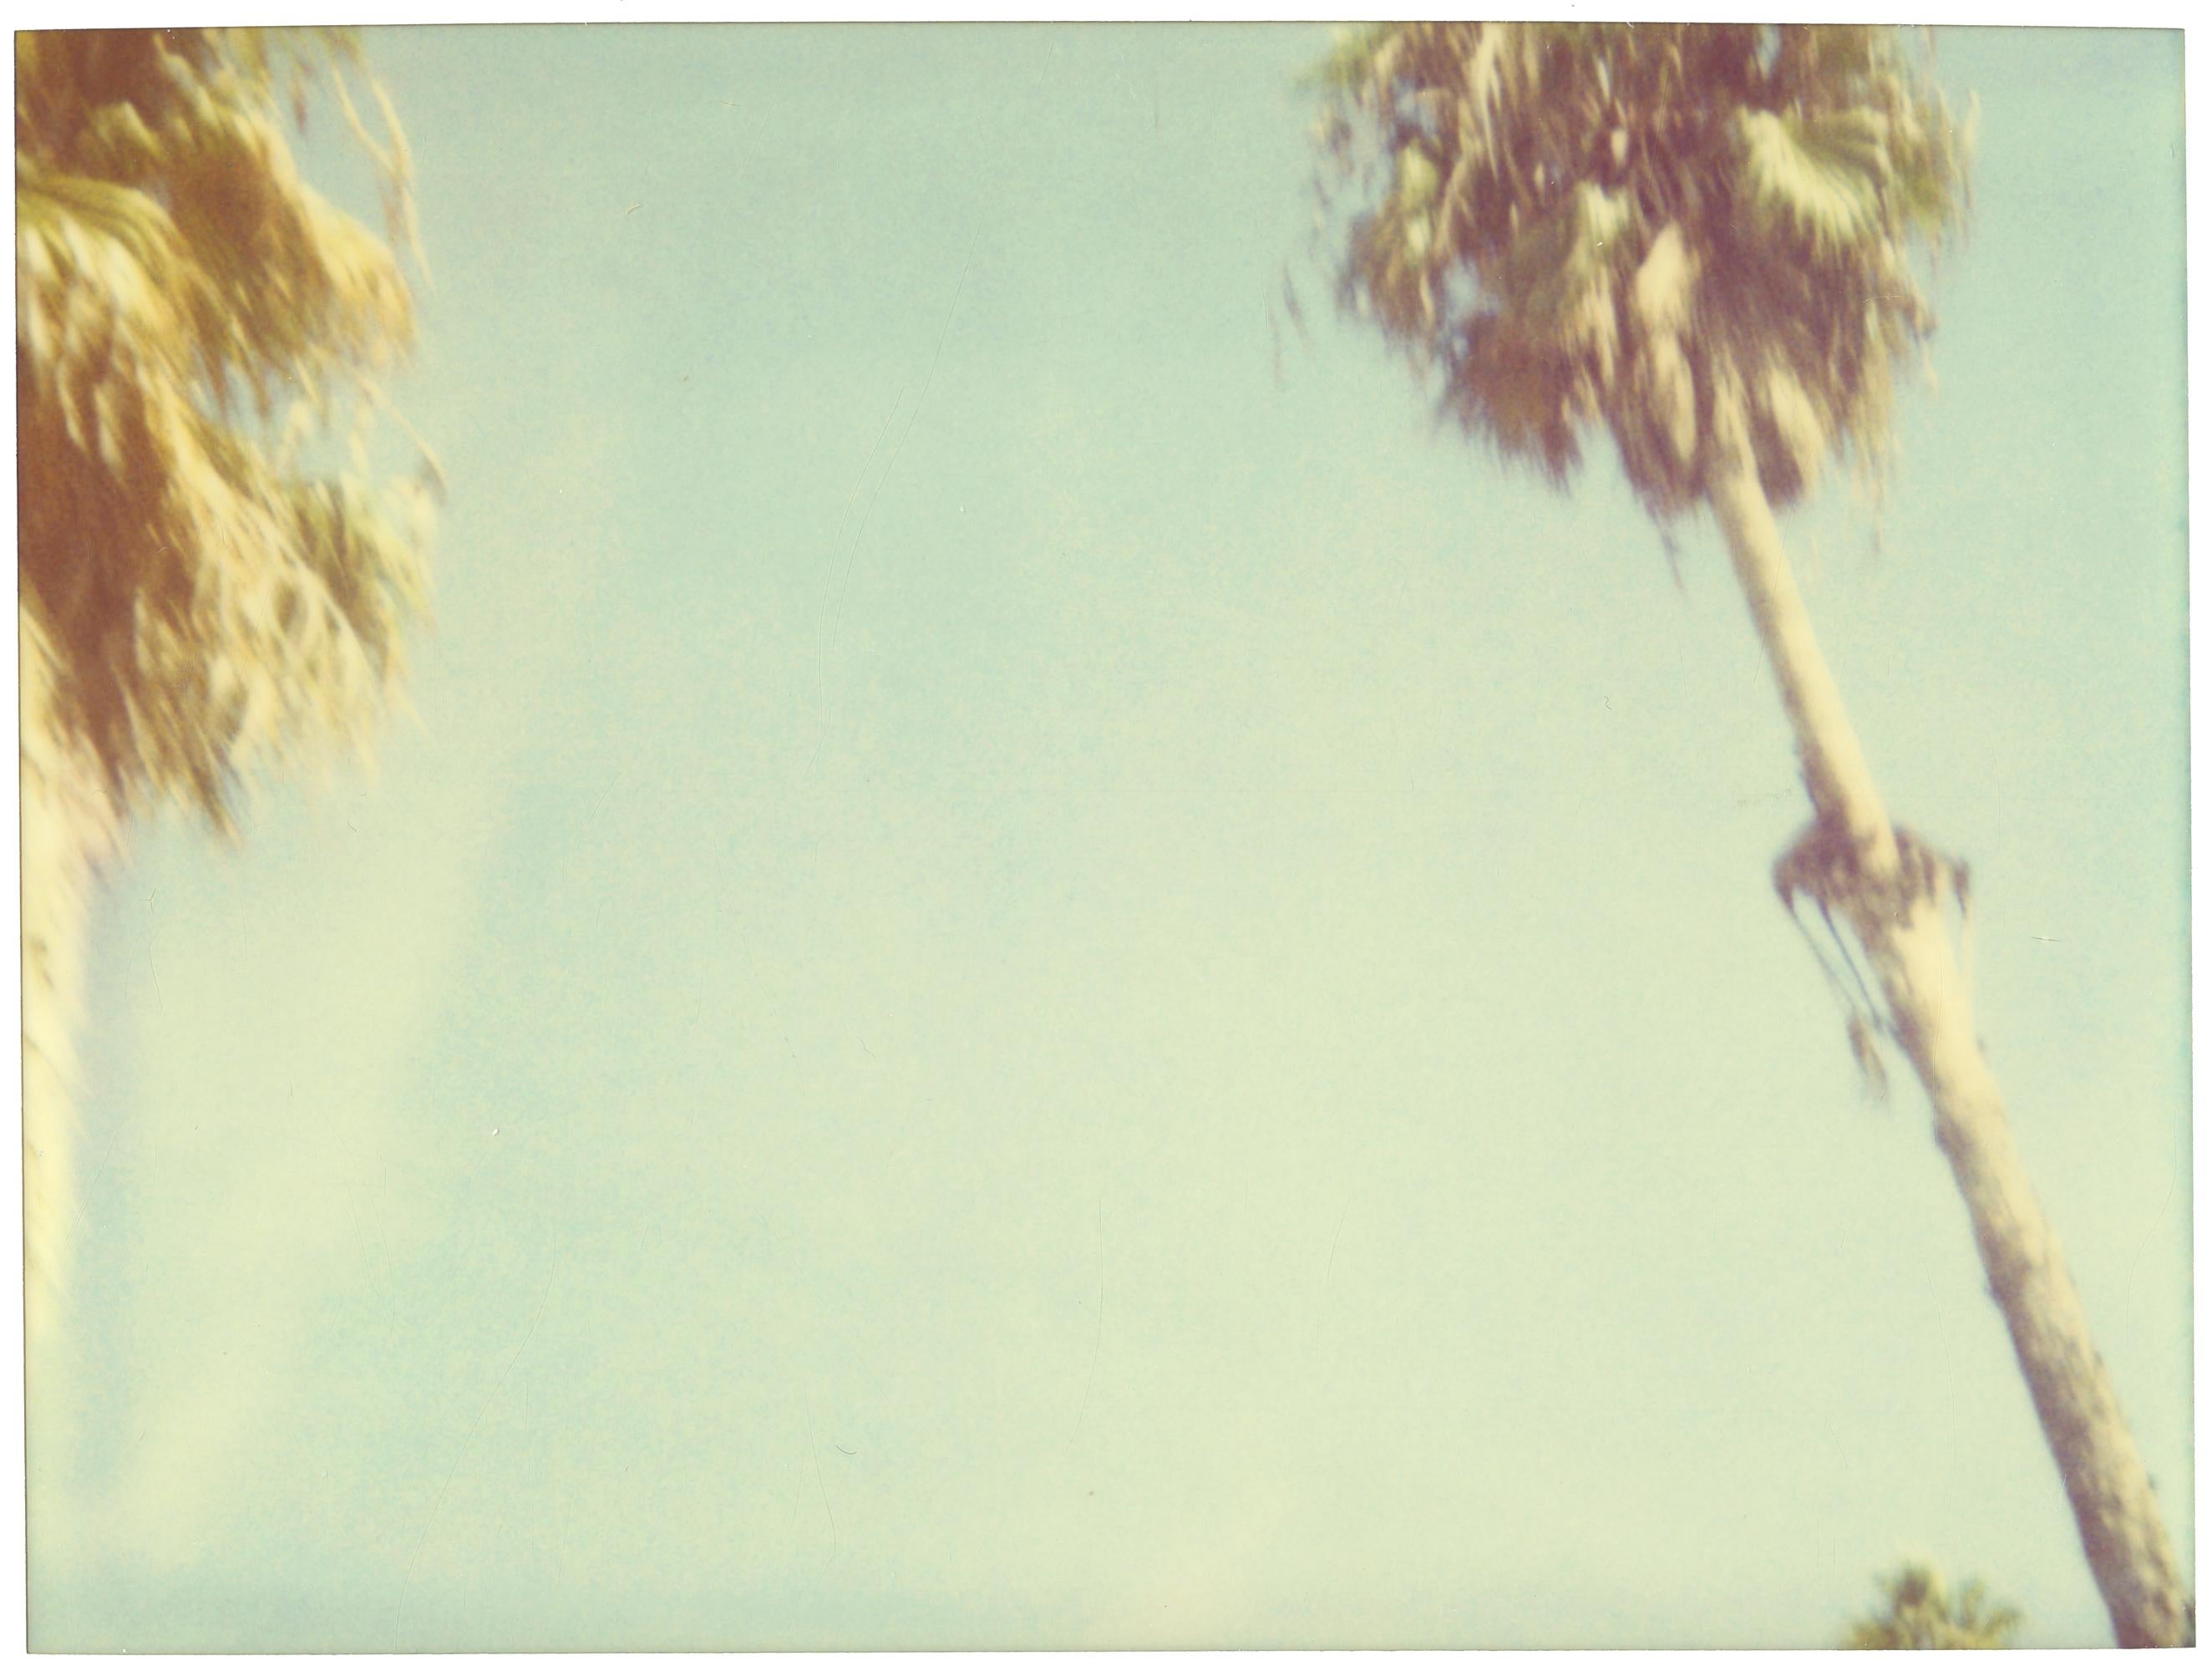 Stefanie Schneider Portrait Photograph - Palm Trees Dive by (Stranger than Paradise) - analog